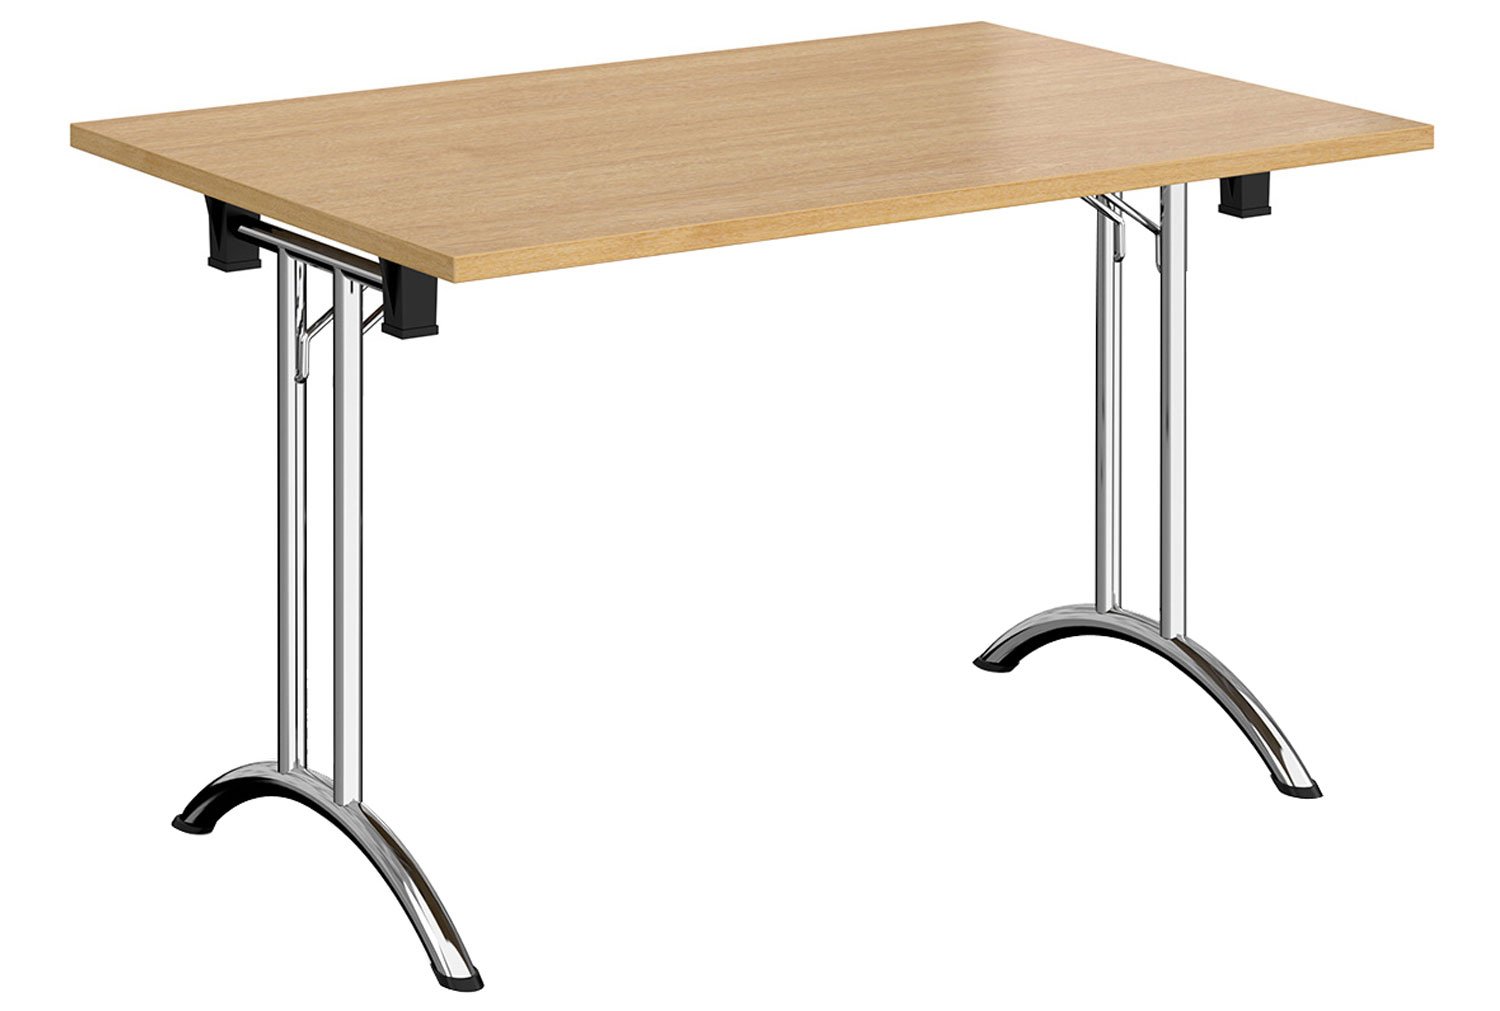 Blaga Rectangular Folding Table, 120wx80dx73h (cm), Oak, Express Delivery